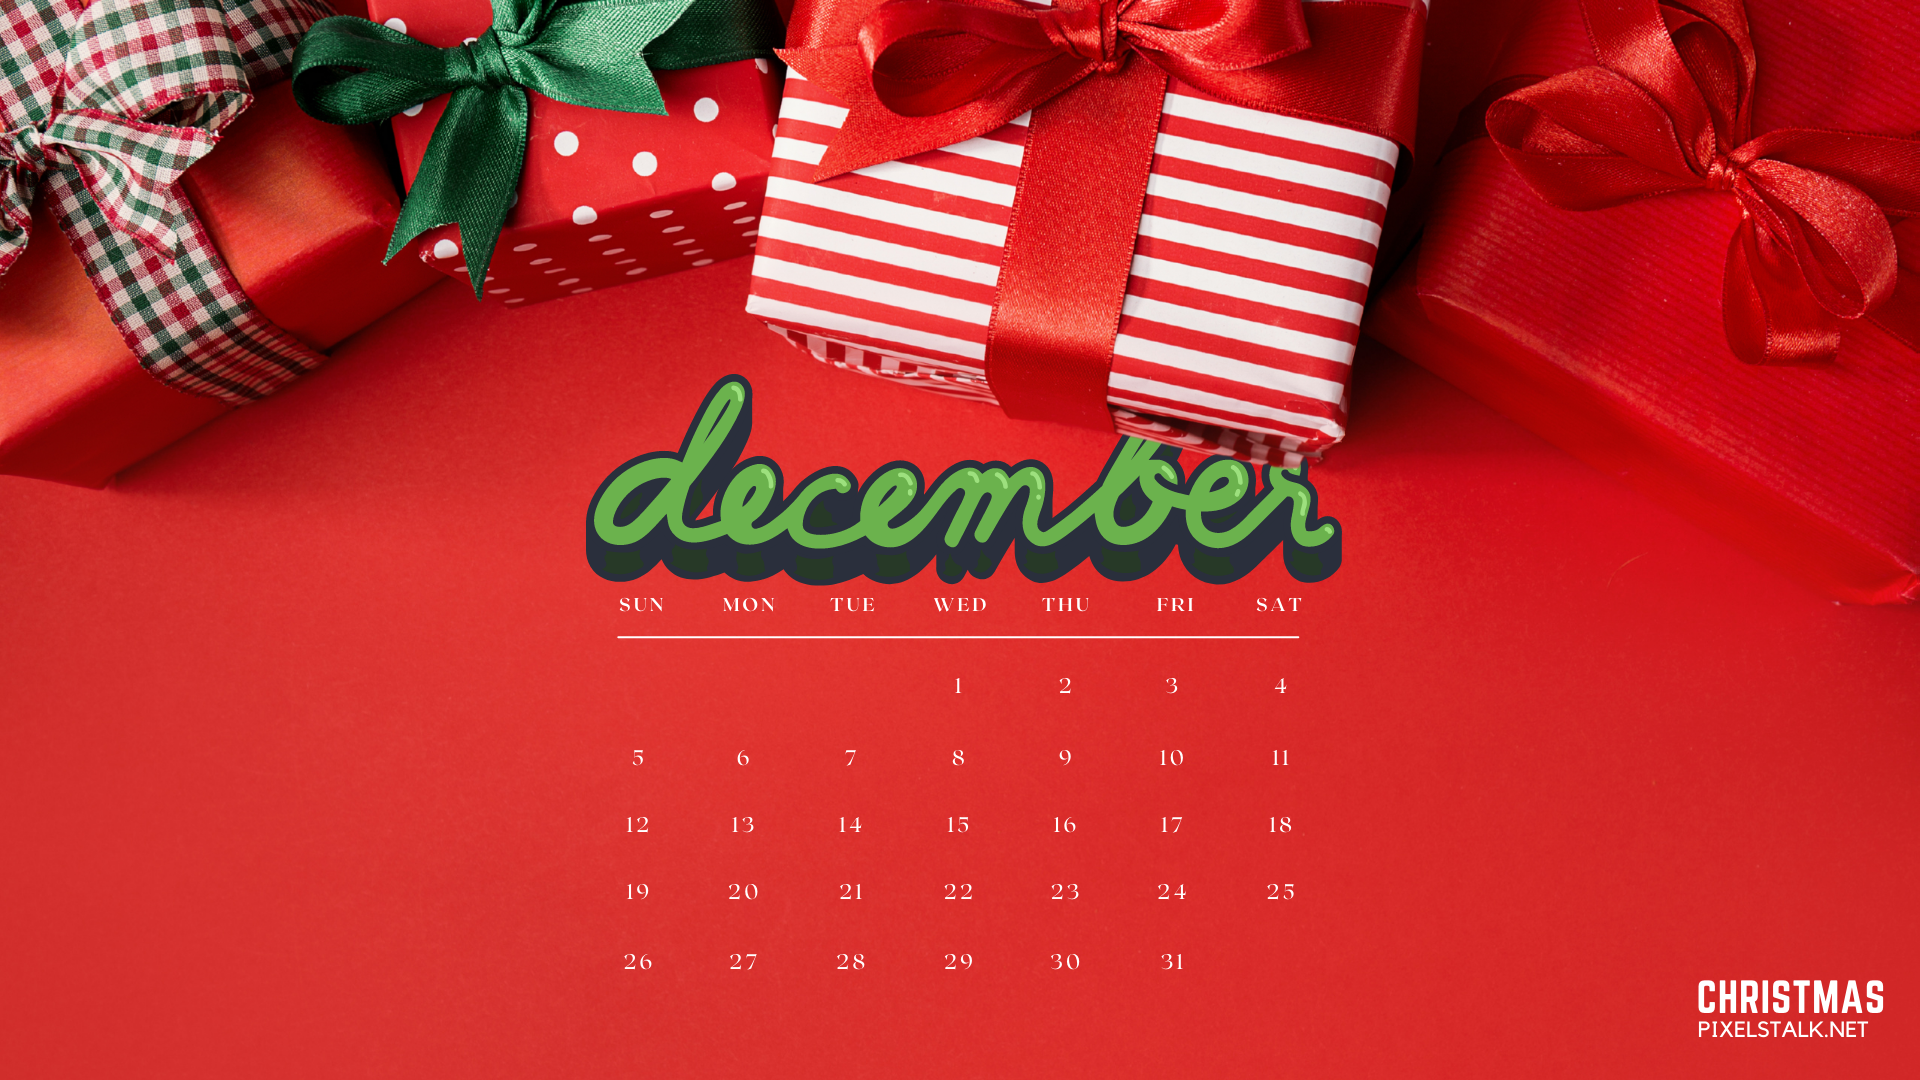 December 2021 Calendar Wallpaper (Desktop and Mobile version)